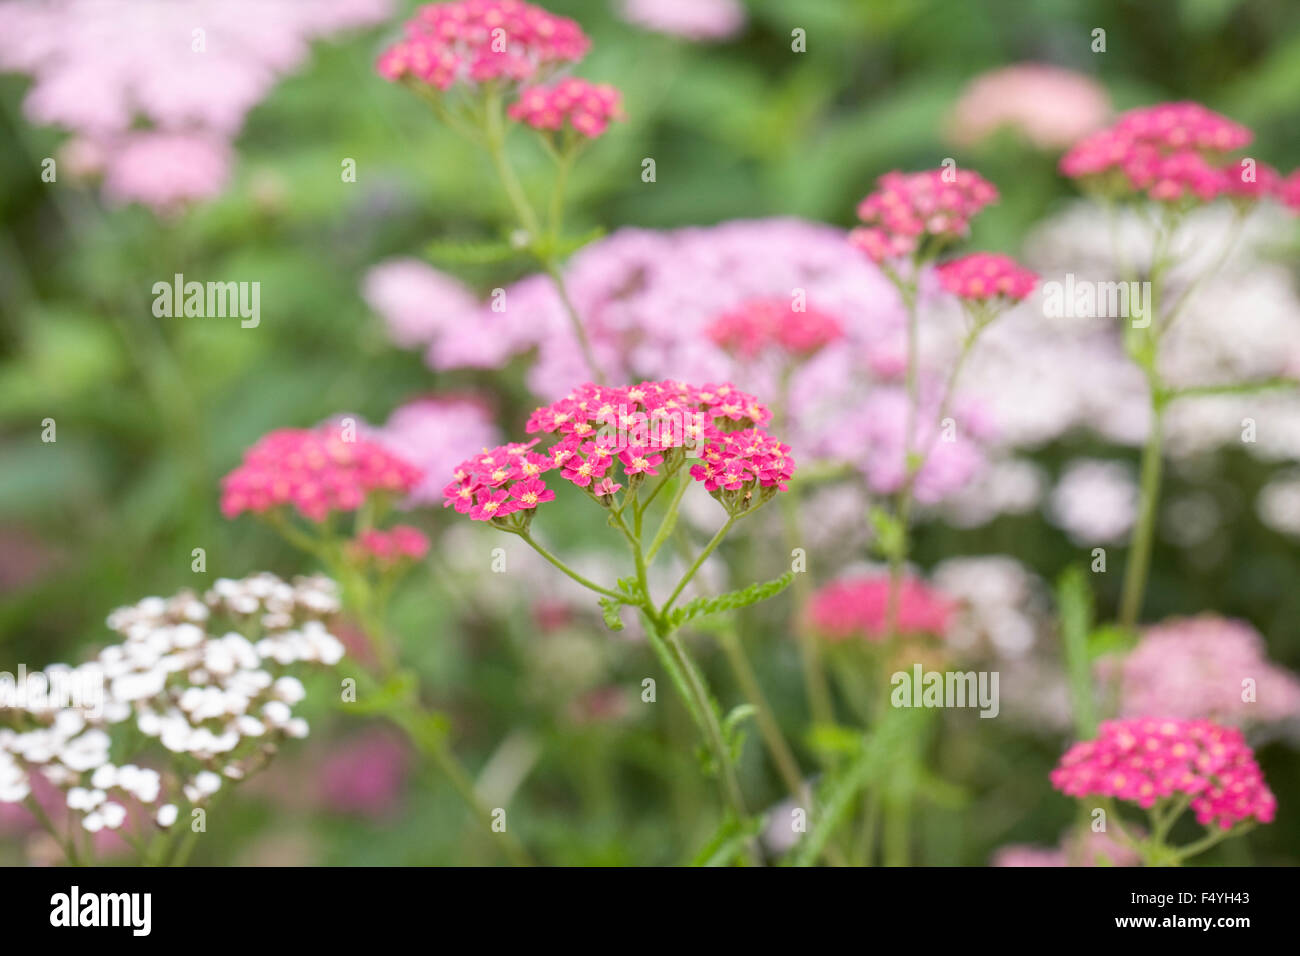 Pink Yarrow Flowers growing in the garden Stock Photo - Alamy